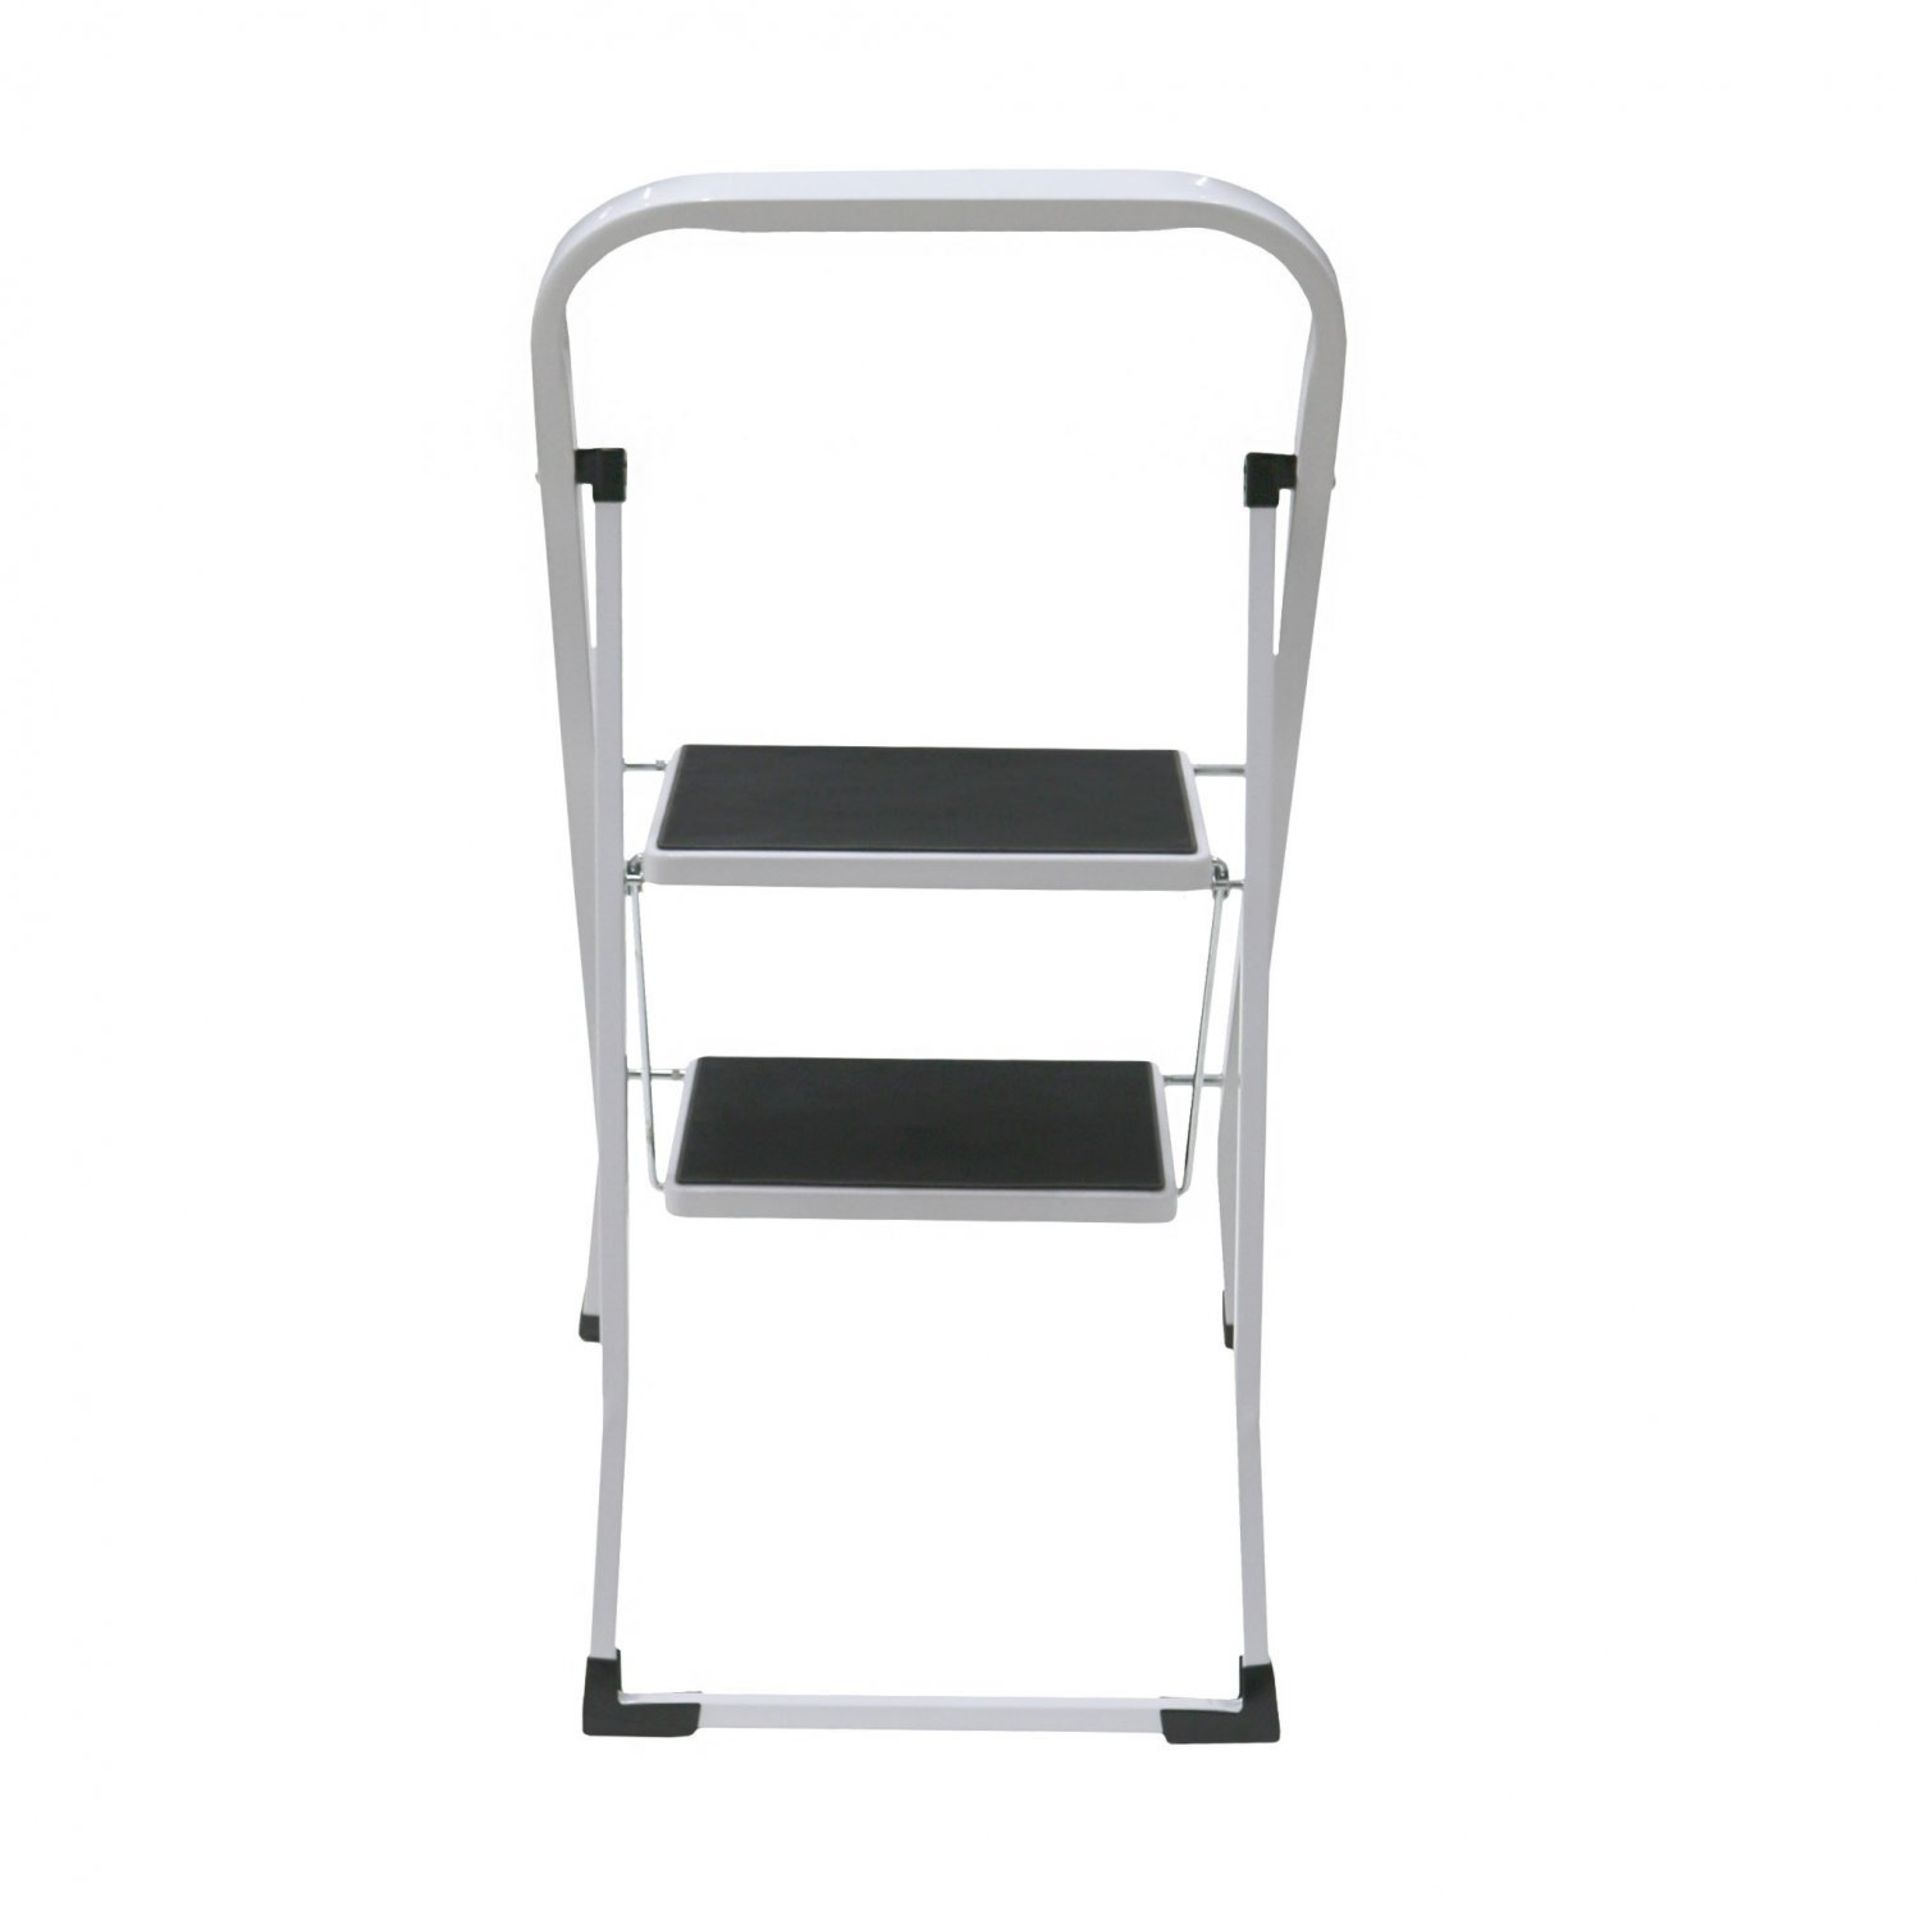 (KK185) Foldable 2 Step Ladder Stepladder Non Slip Tread Safety Steel The Foldable 2 St... - Image 2 of 2